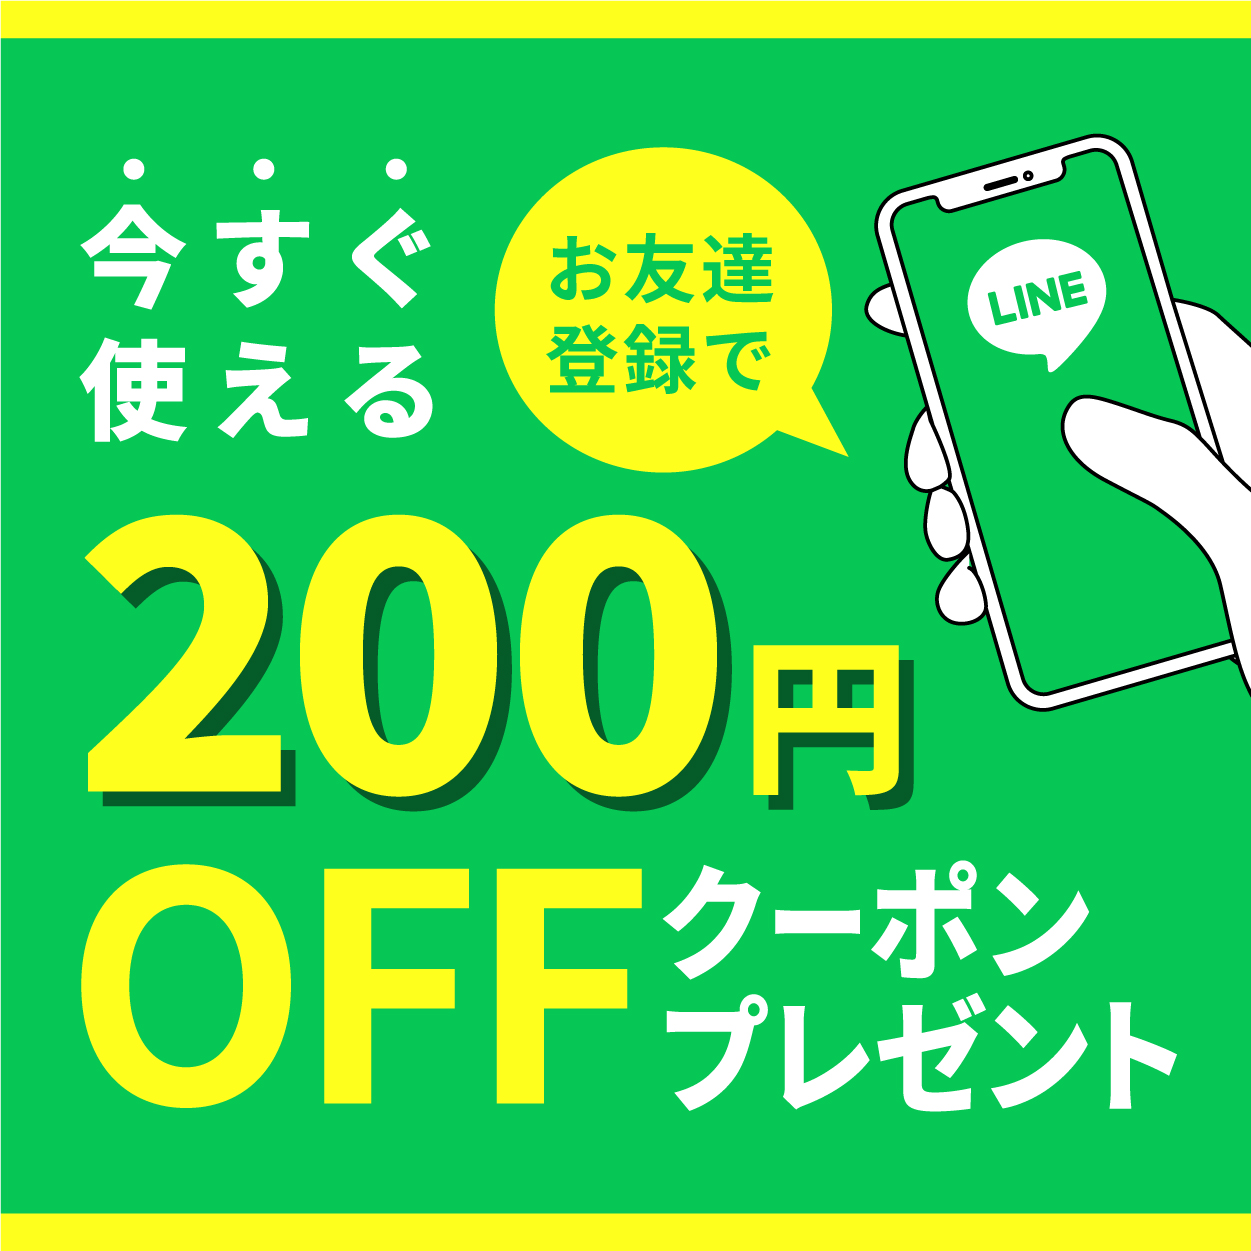  Asahi Monster Energy drink bottle can 500ml 48ps.@( 24 pcs insertion 2 case ) free shipping 